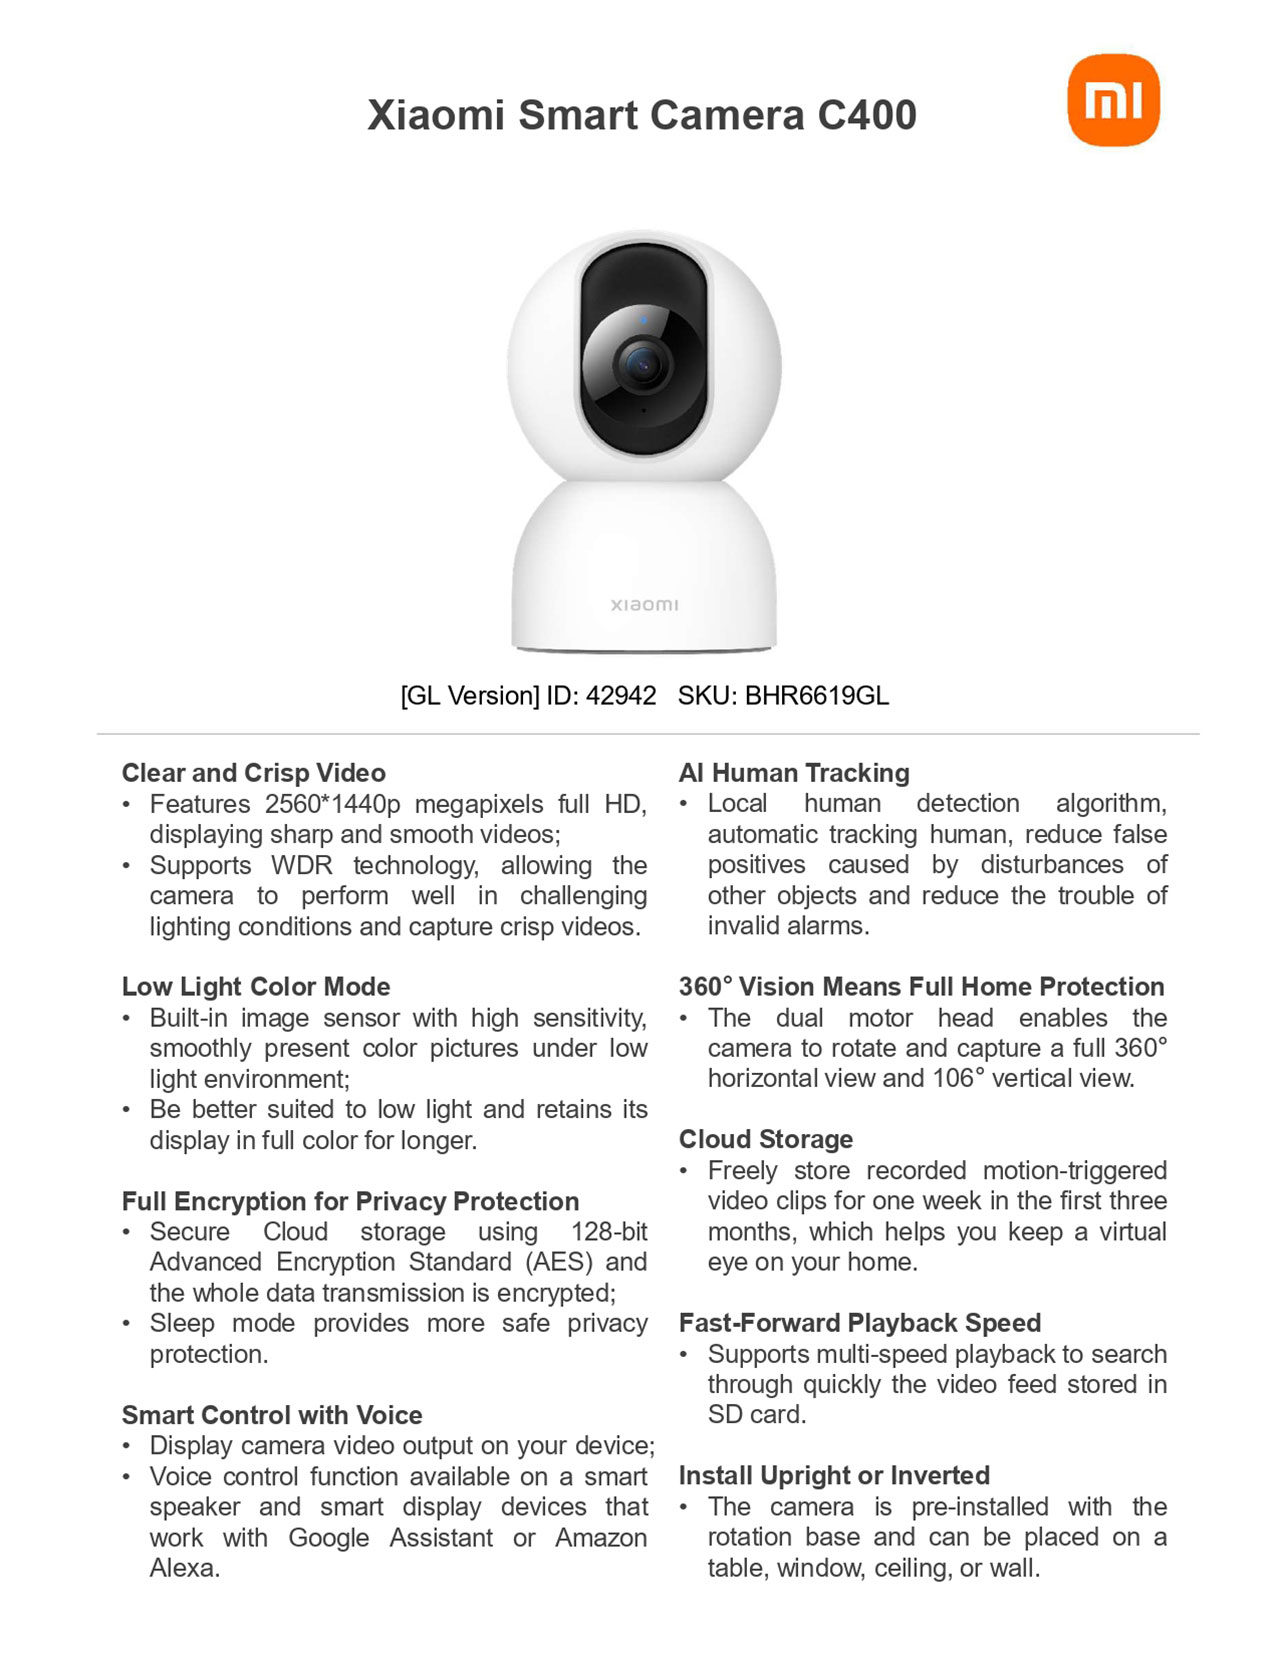 Xiaomi C400 Smart Camera 